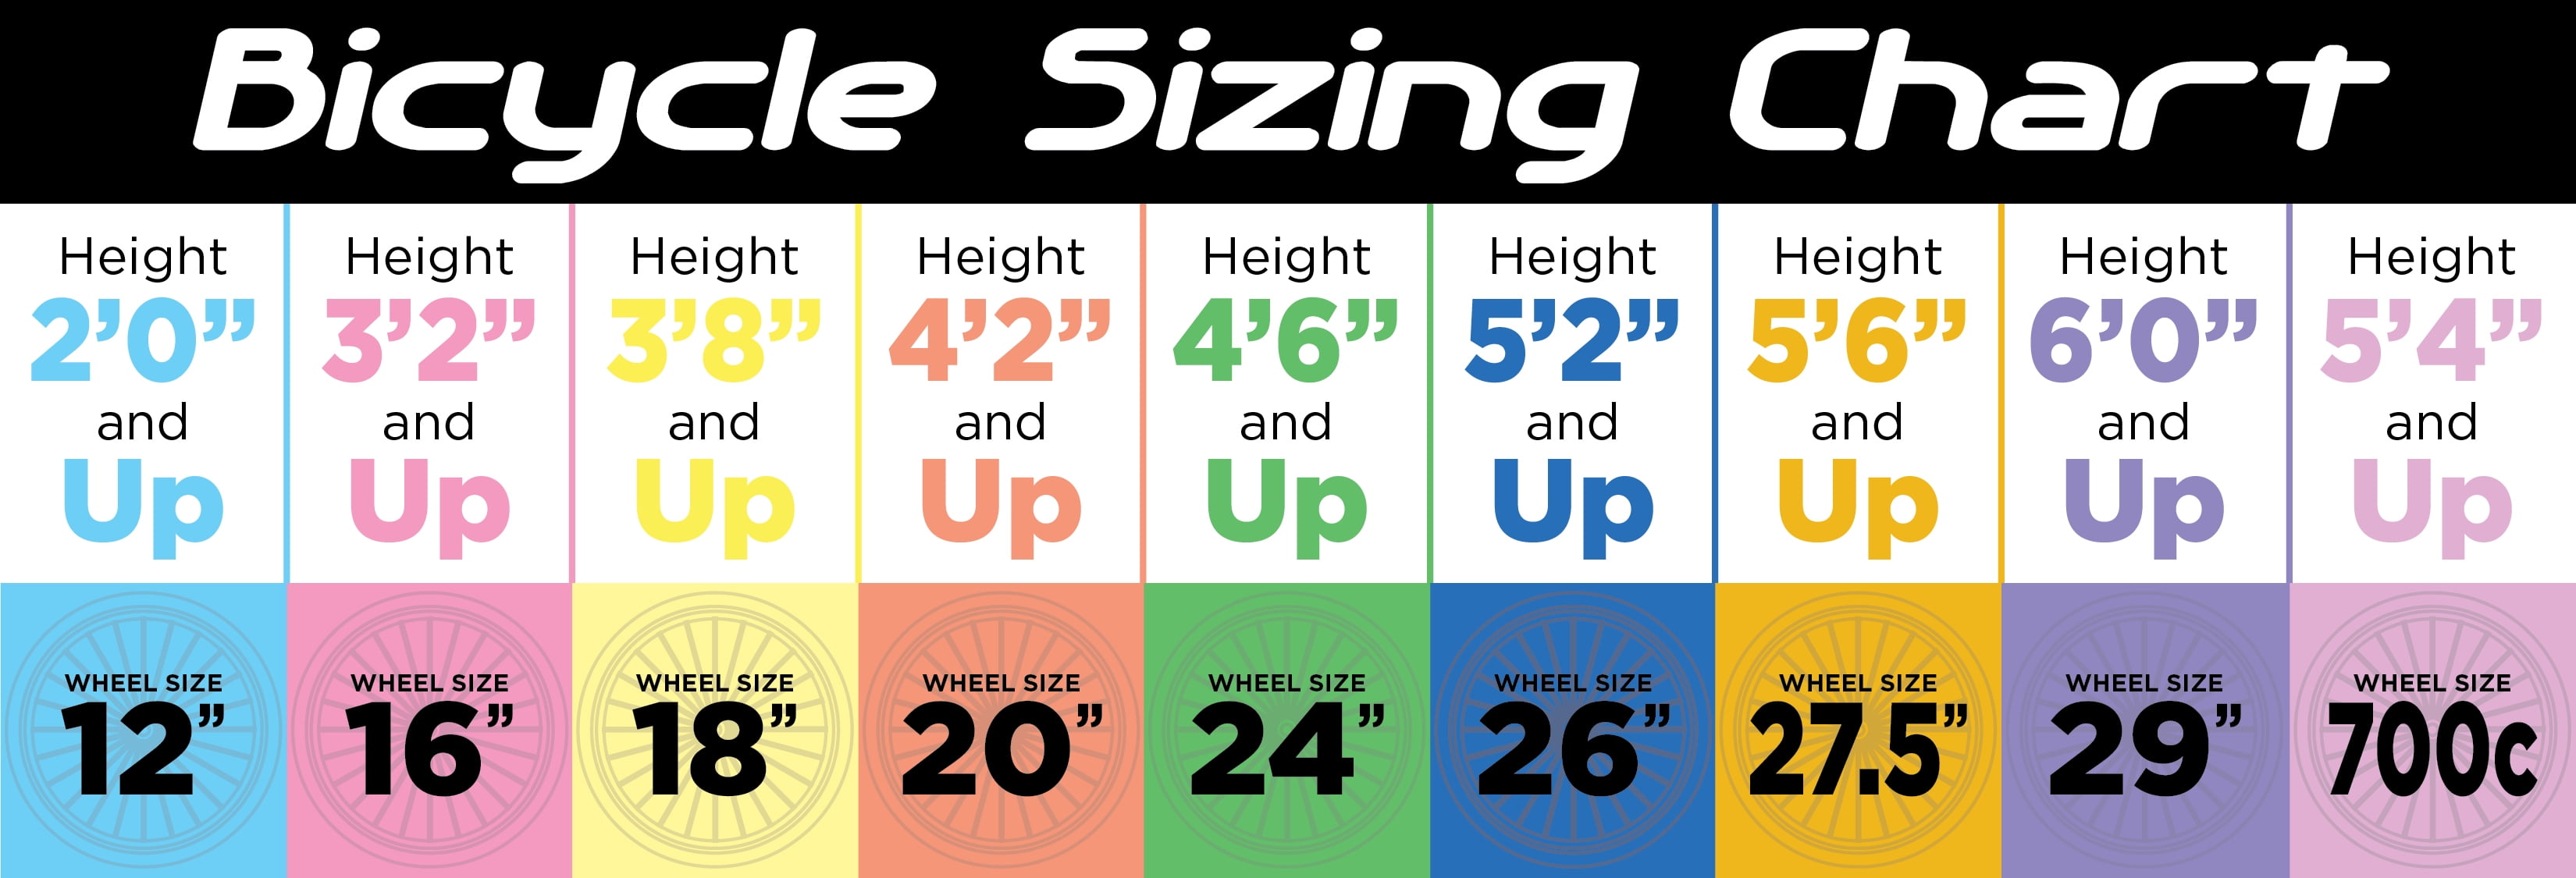 26 bike height range